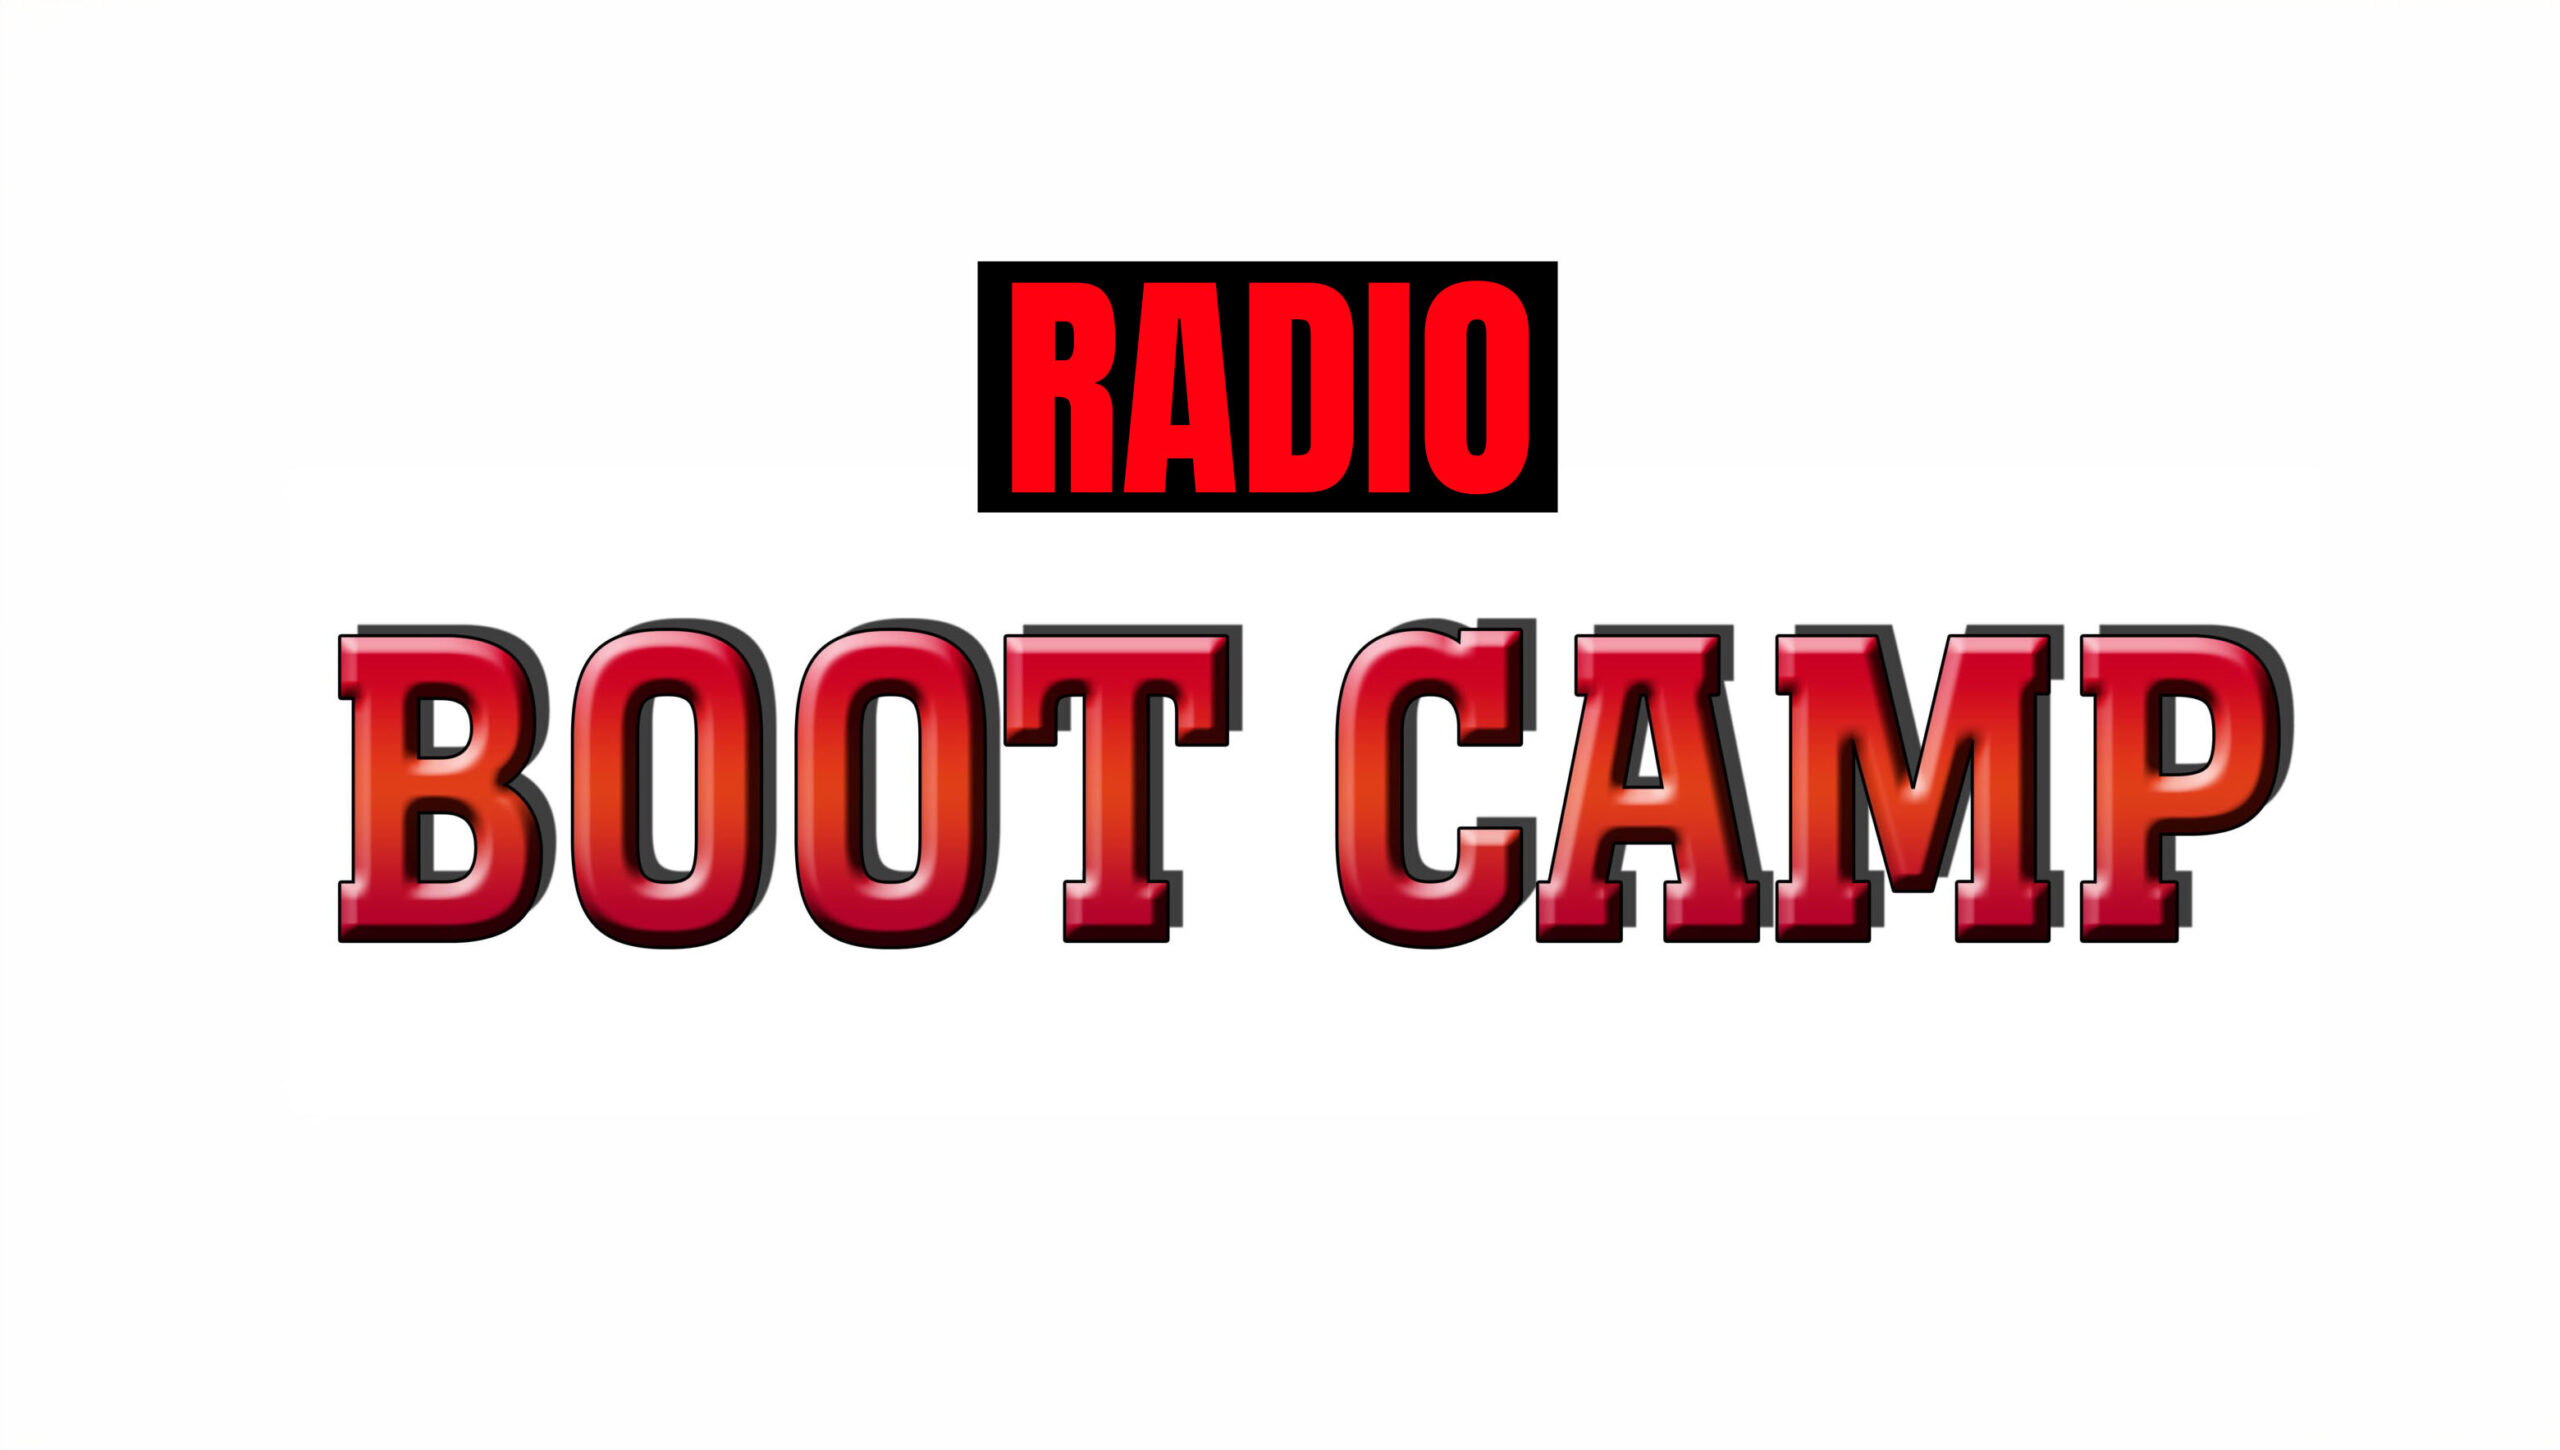 Radio Boot Camp graphic